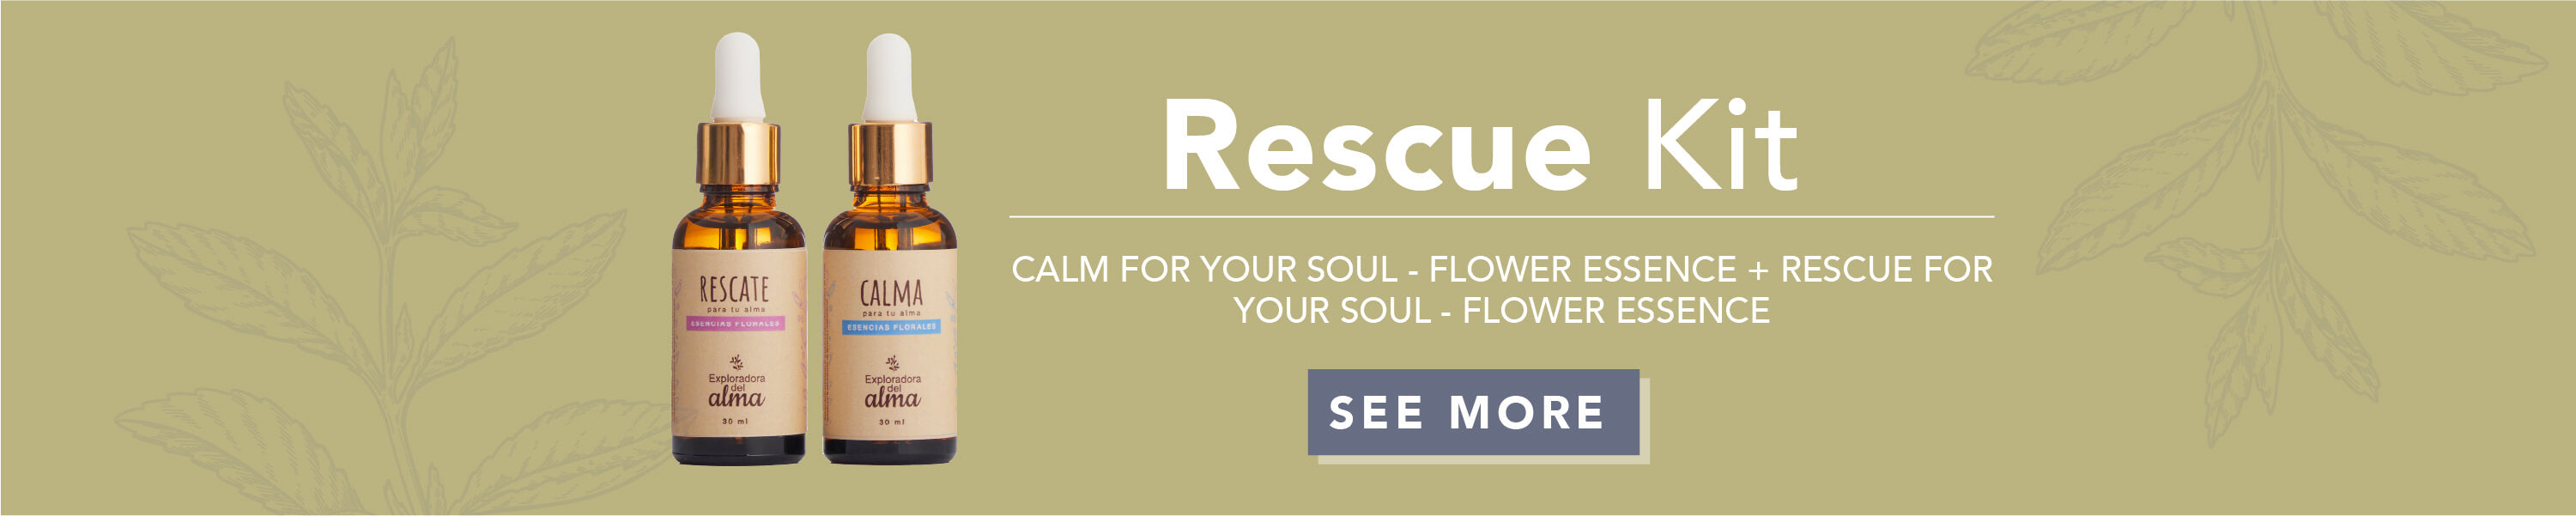 Esencia floral promo kit rescue